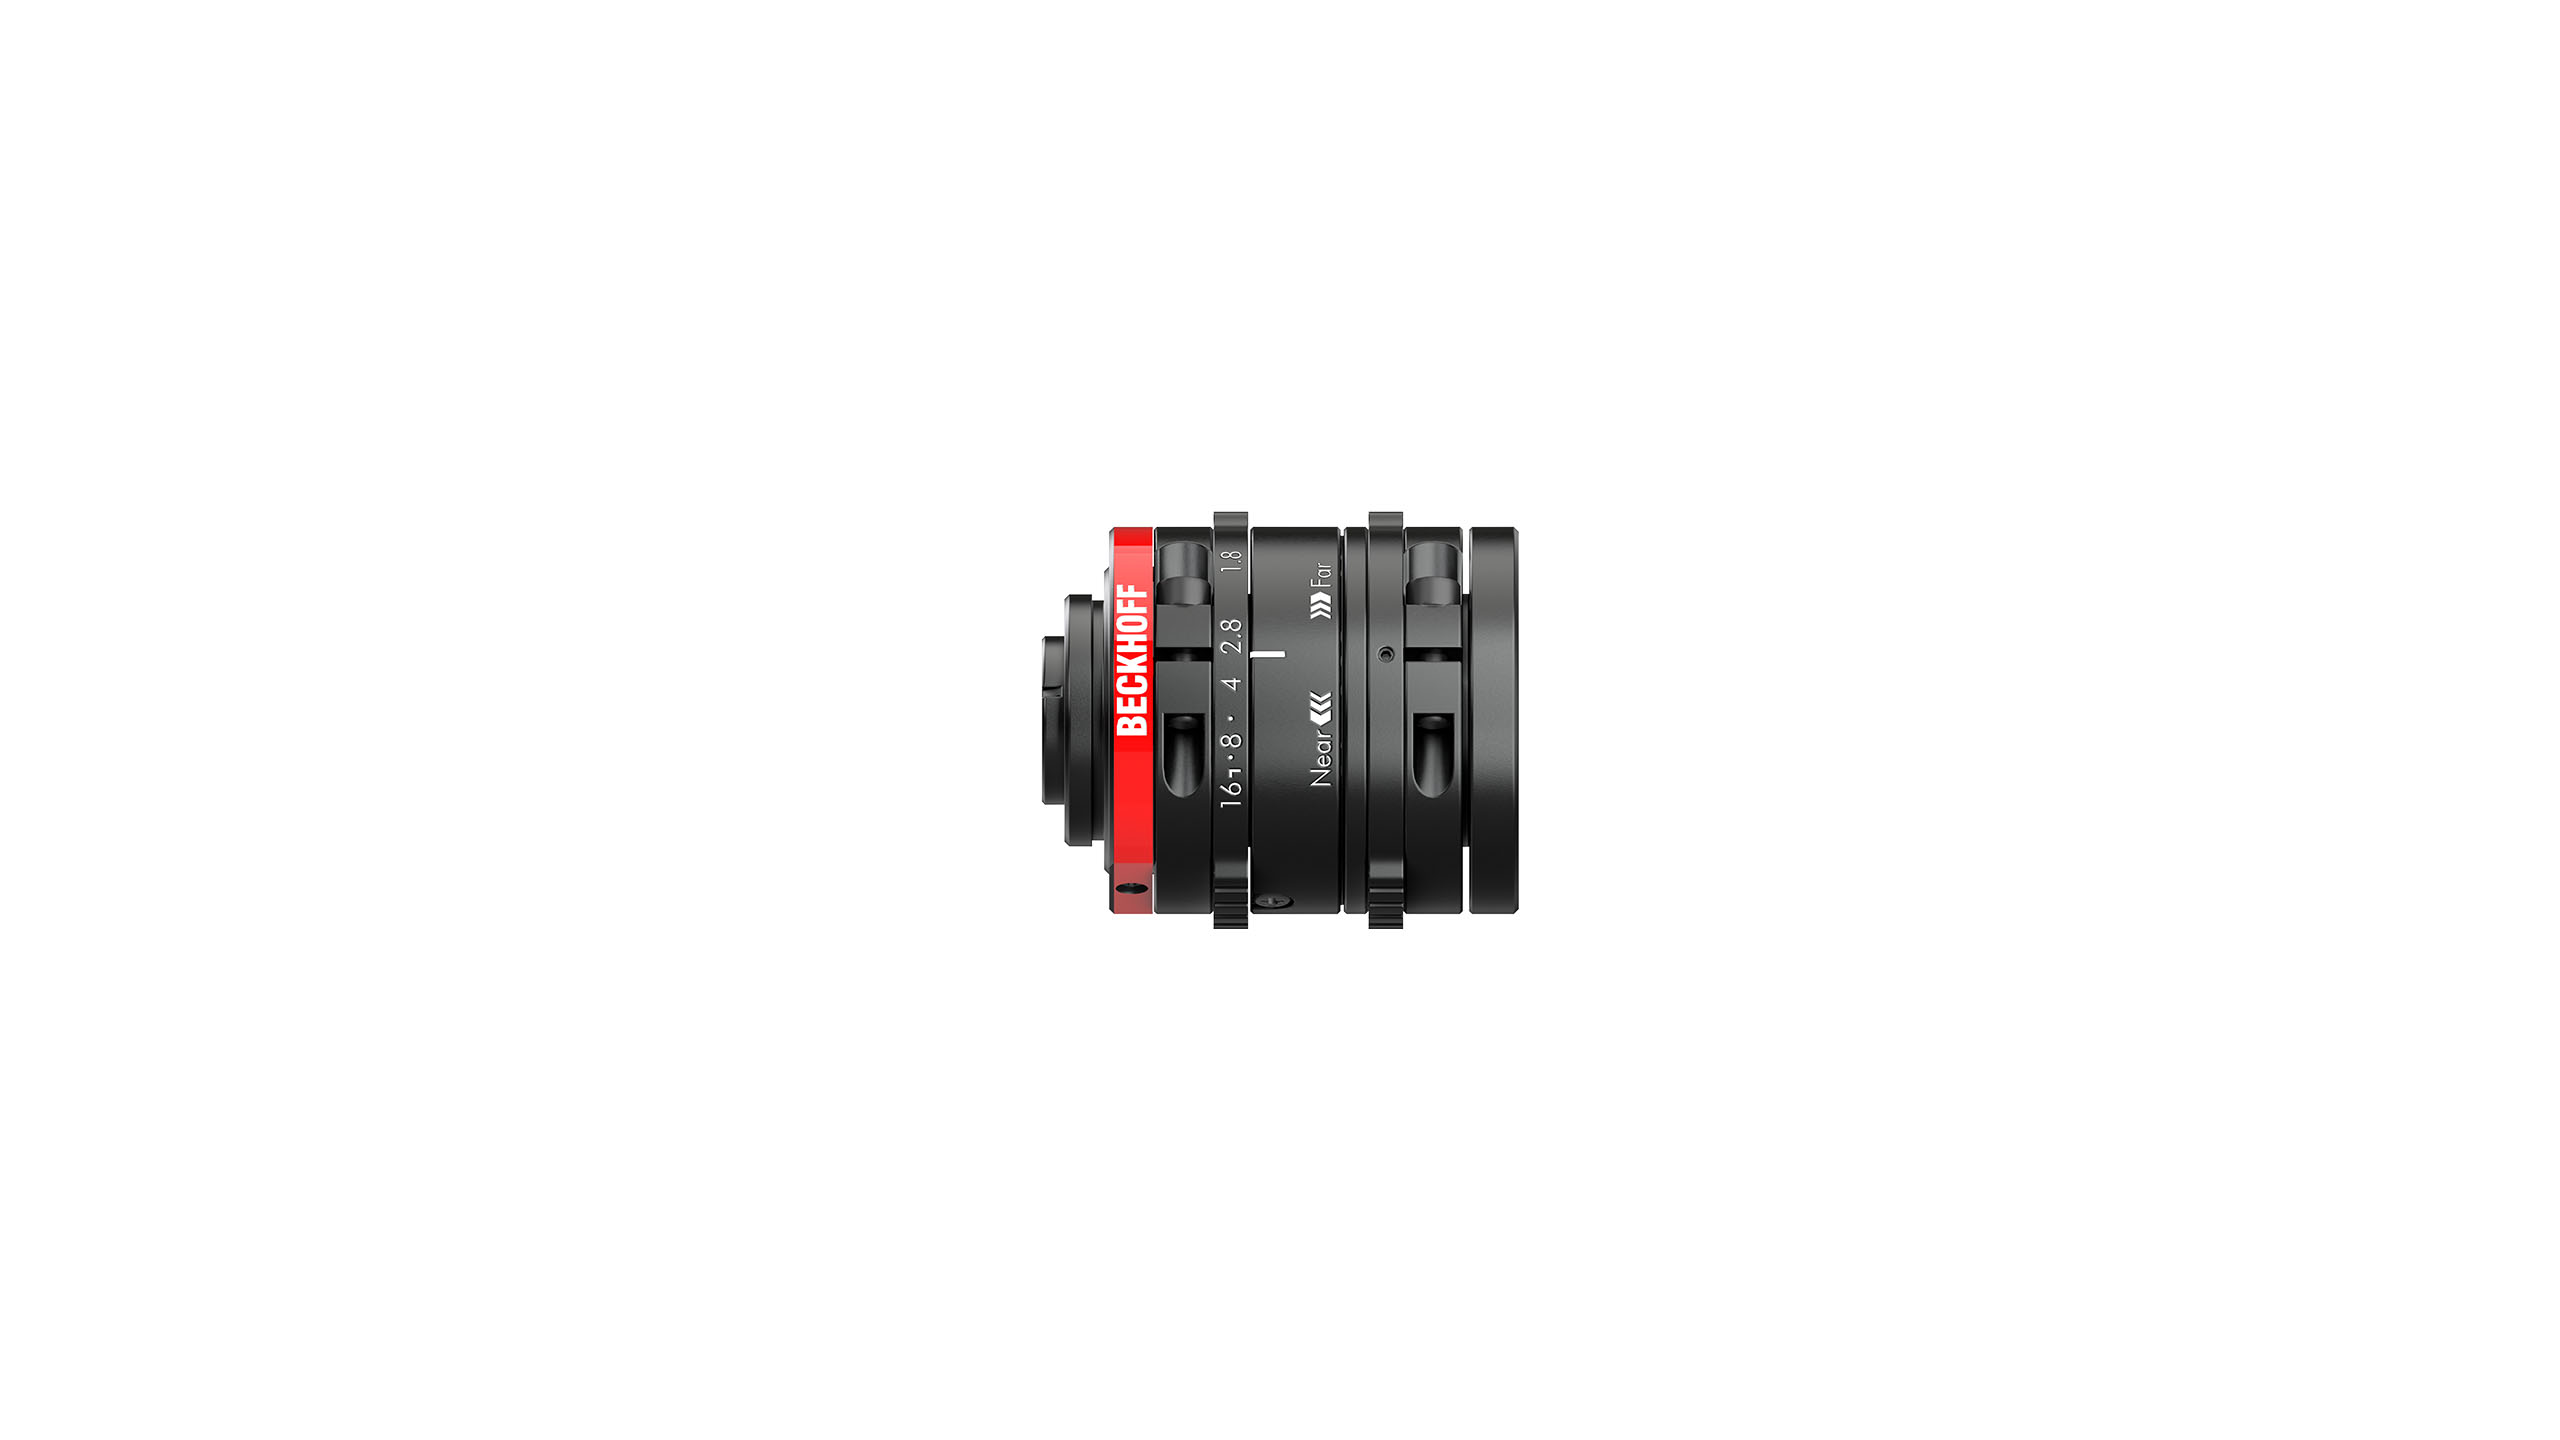 VOS2000-1218 | Camera lens, C mount, image circle 11 mm, pixel size up to 2.0 µm, f = 12 mm, f/1.8